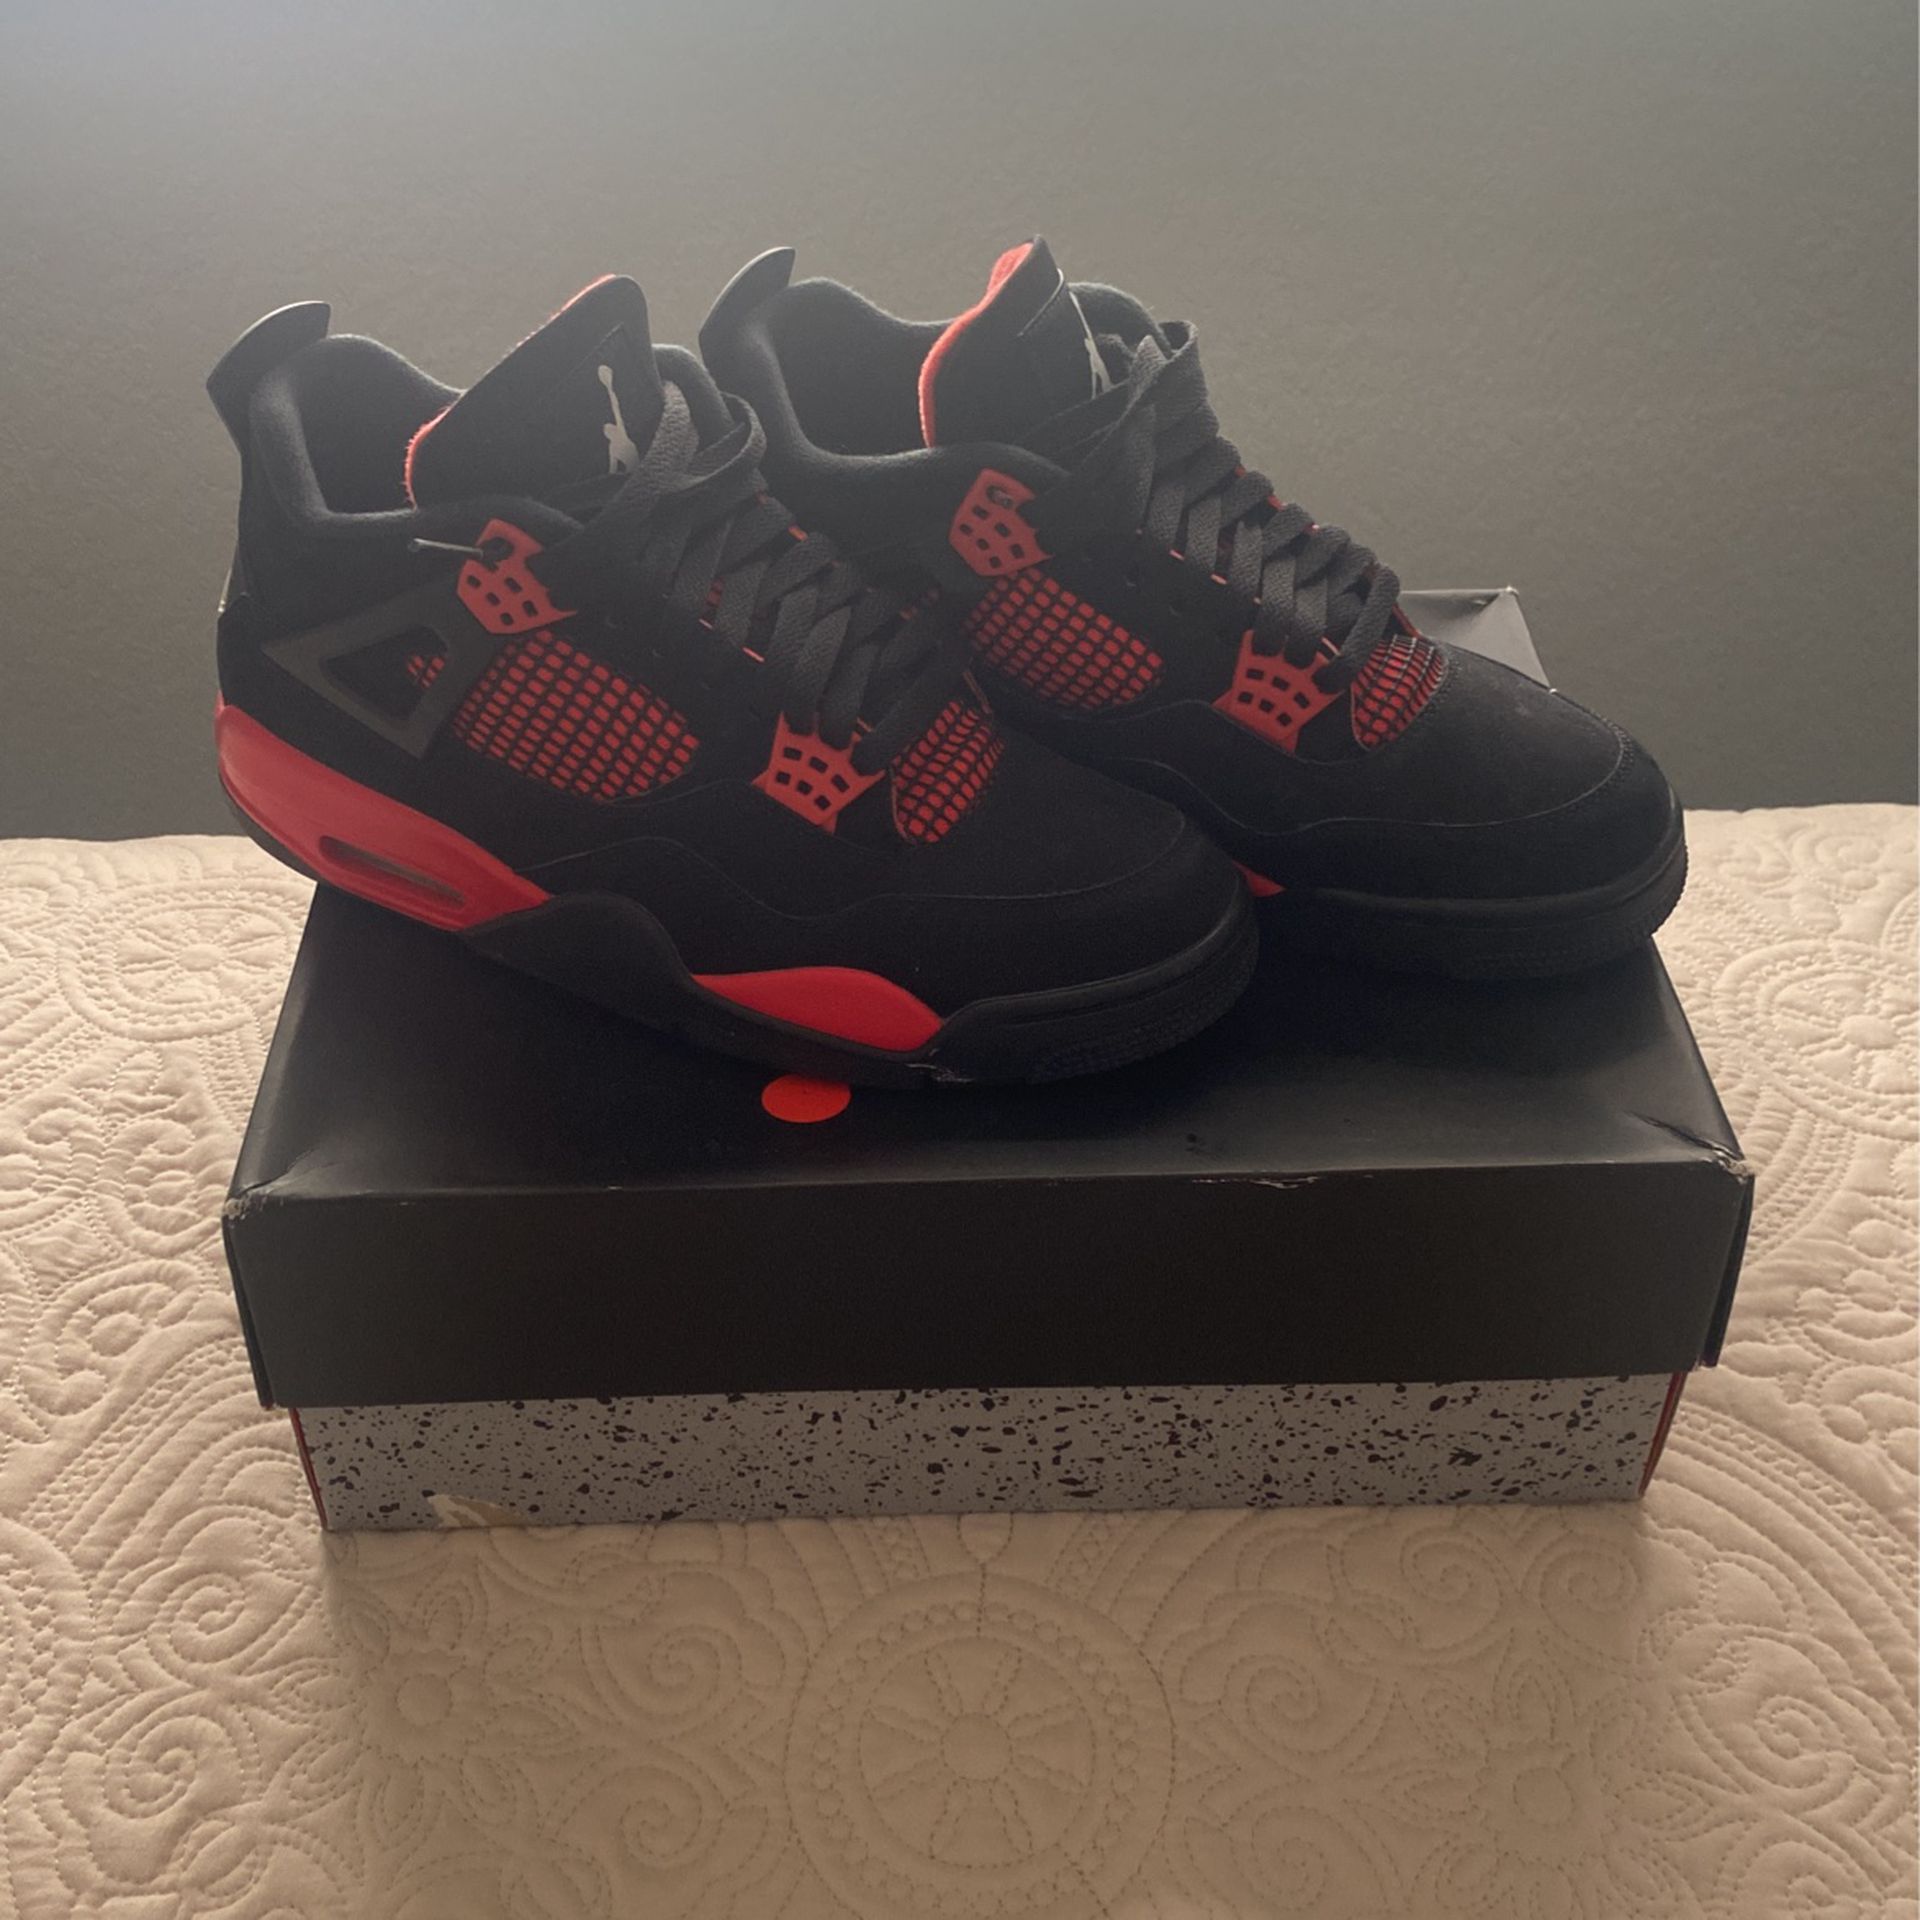 Jordan 4 Red Thunders Size 9.5